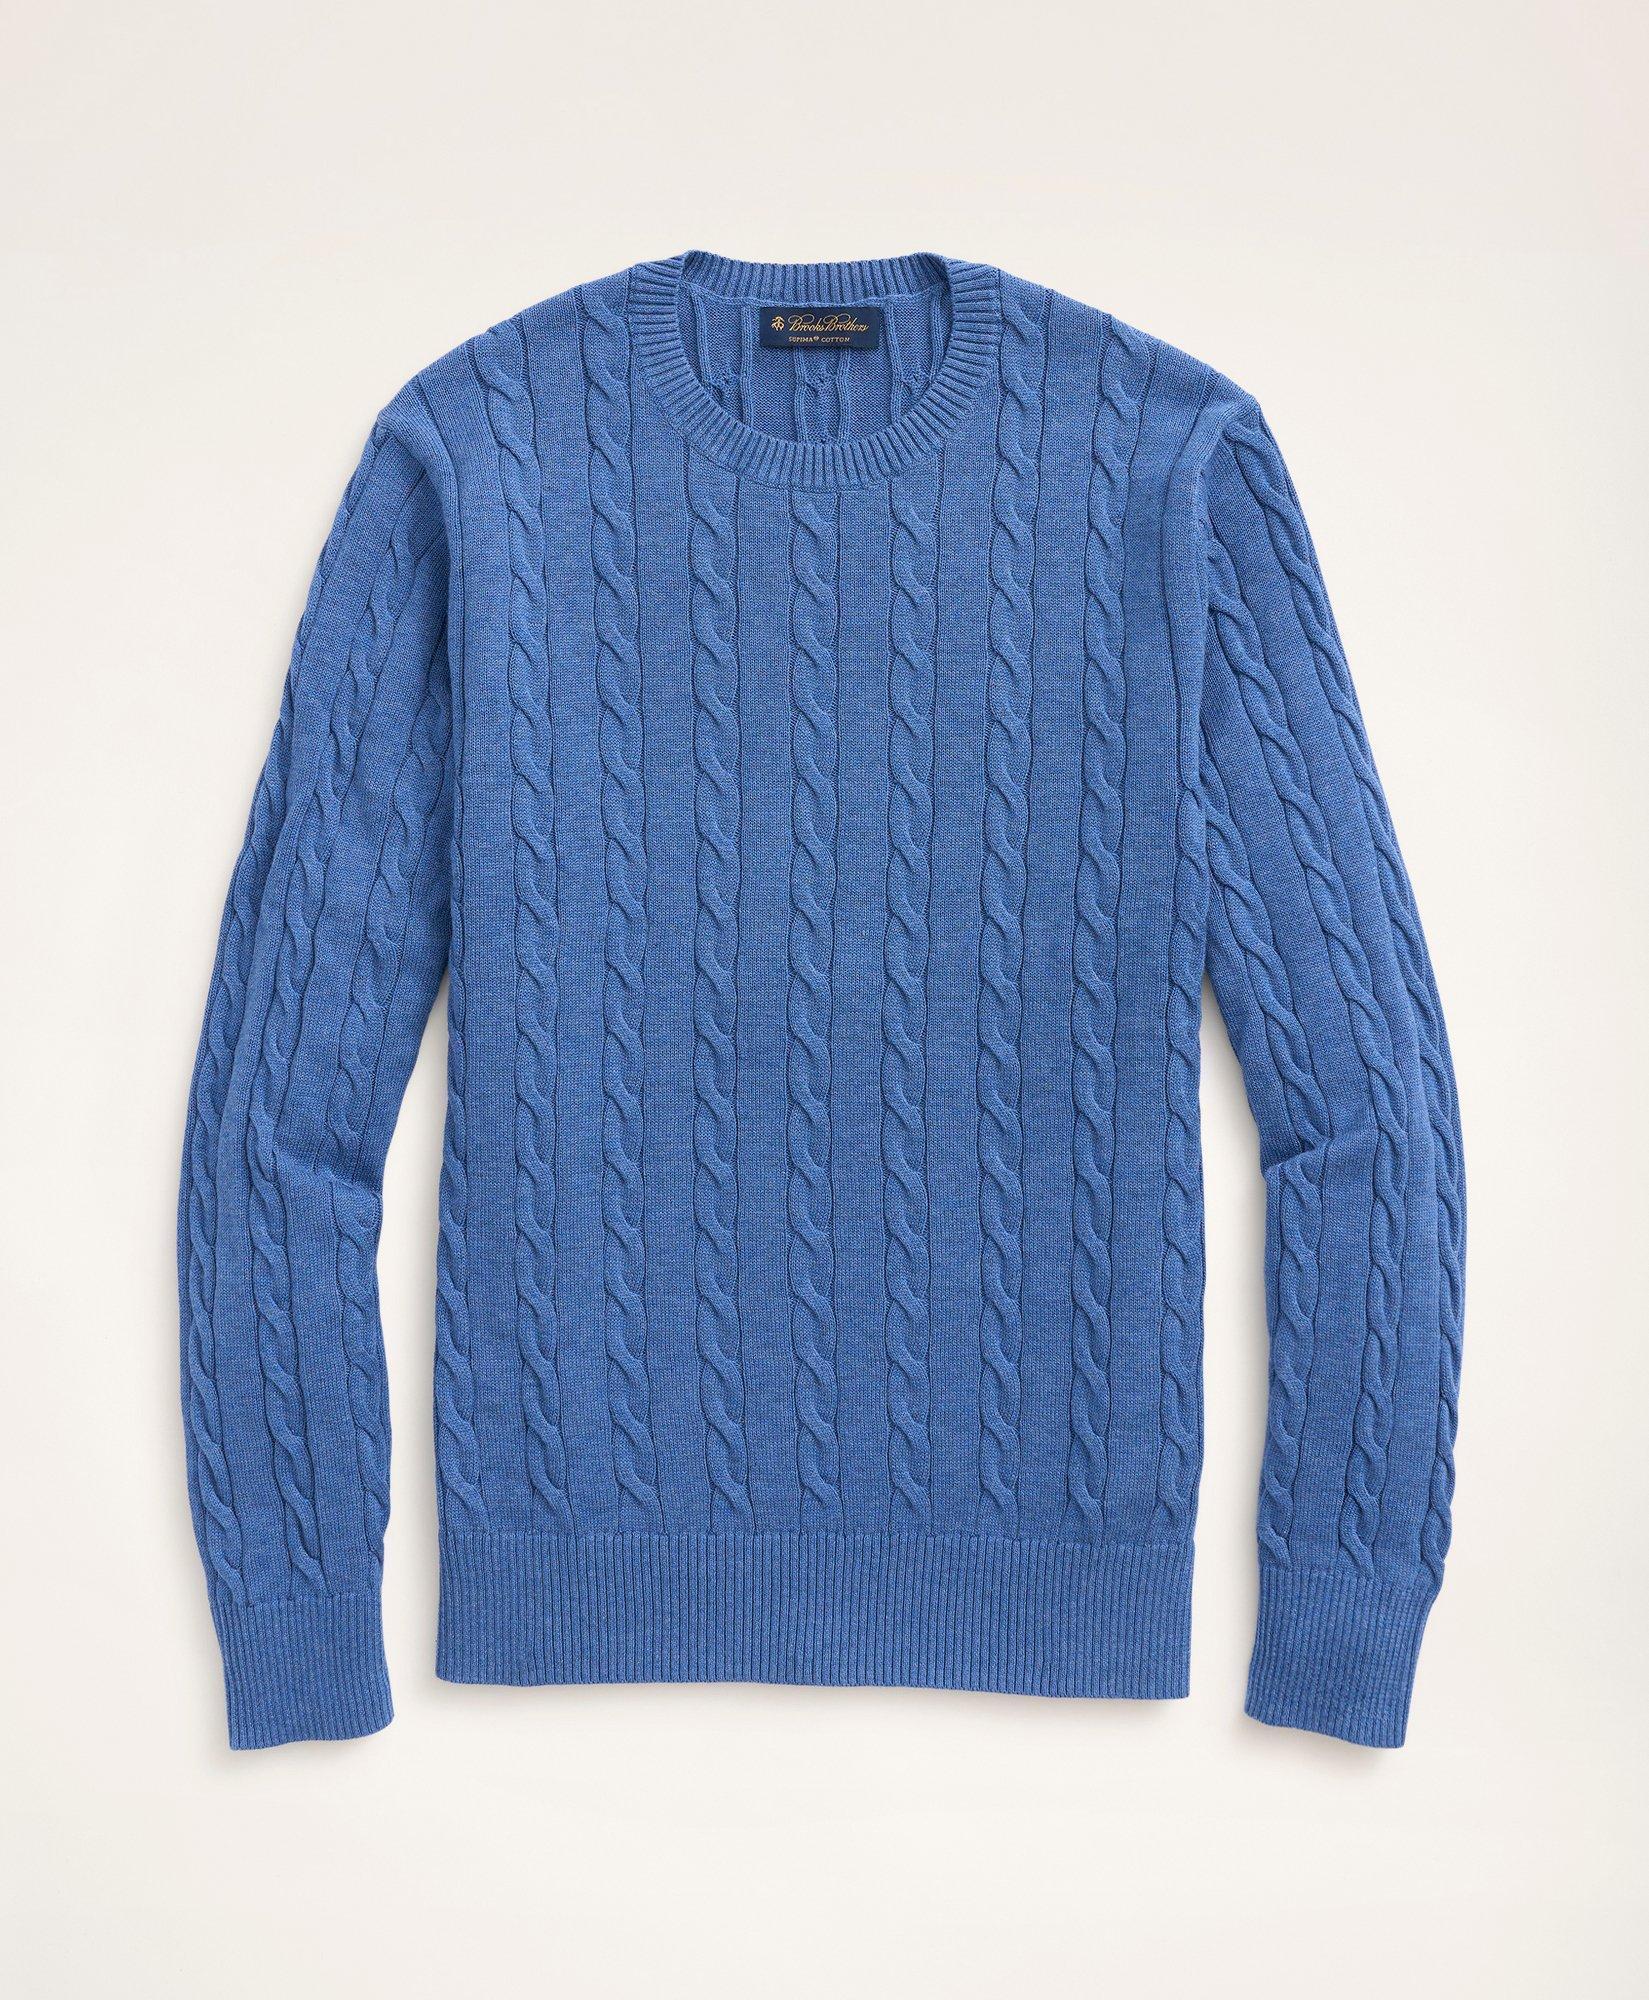 Brooks Brothers Big & Tall Supima Cotton Cable Crewneck Sweater | Dark Blue Heather | Size 4x Tall